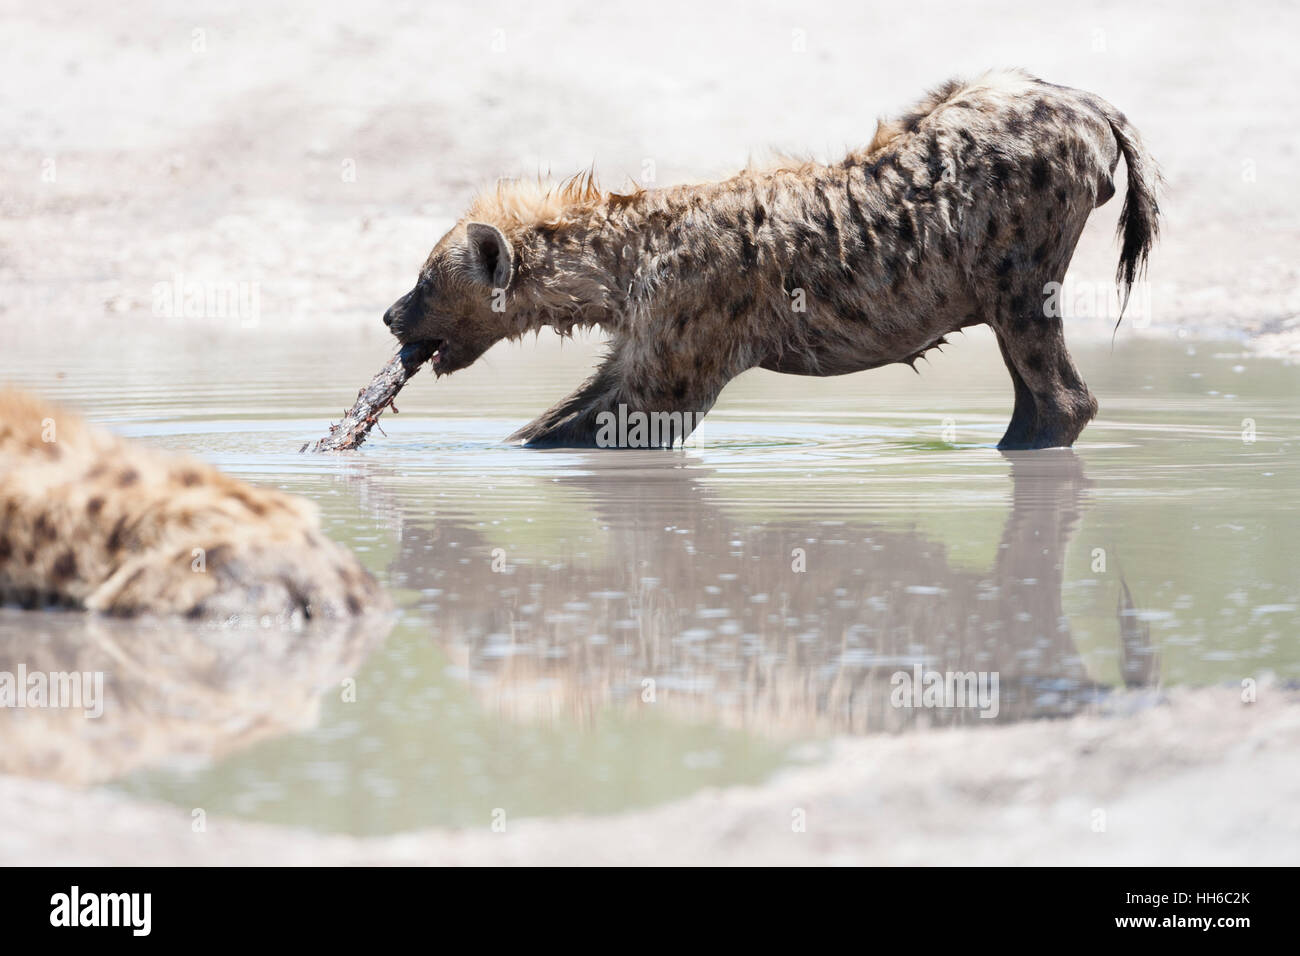 Etosha National Park, Namibia. Spotted hyena (Crocuta crocuta) playing with stick in water. Stock Photo